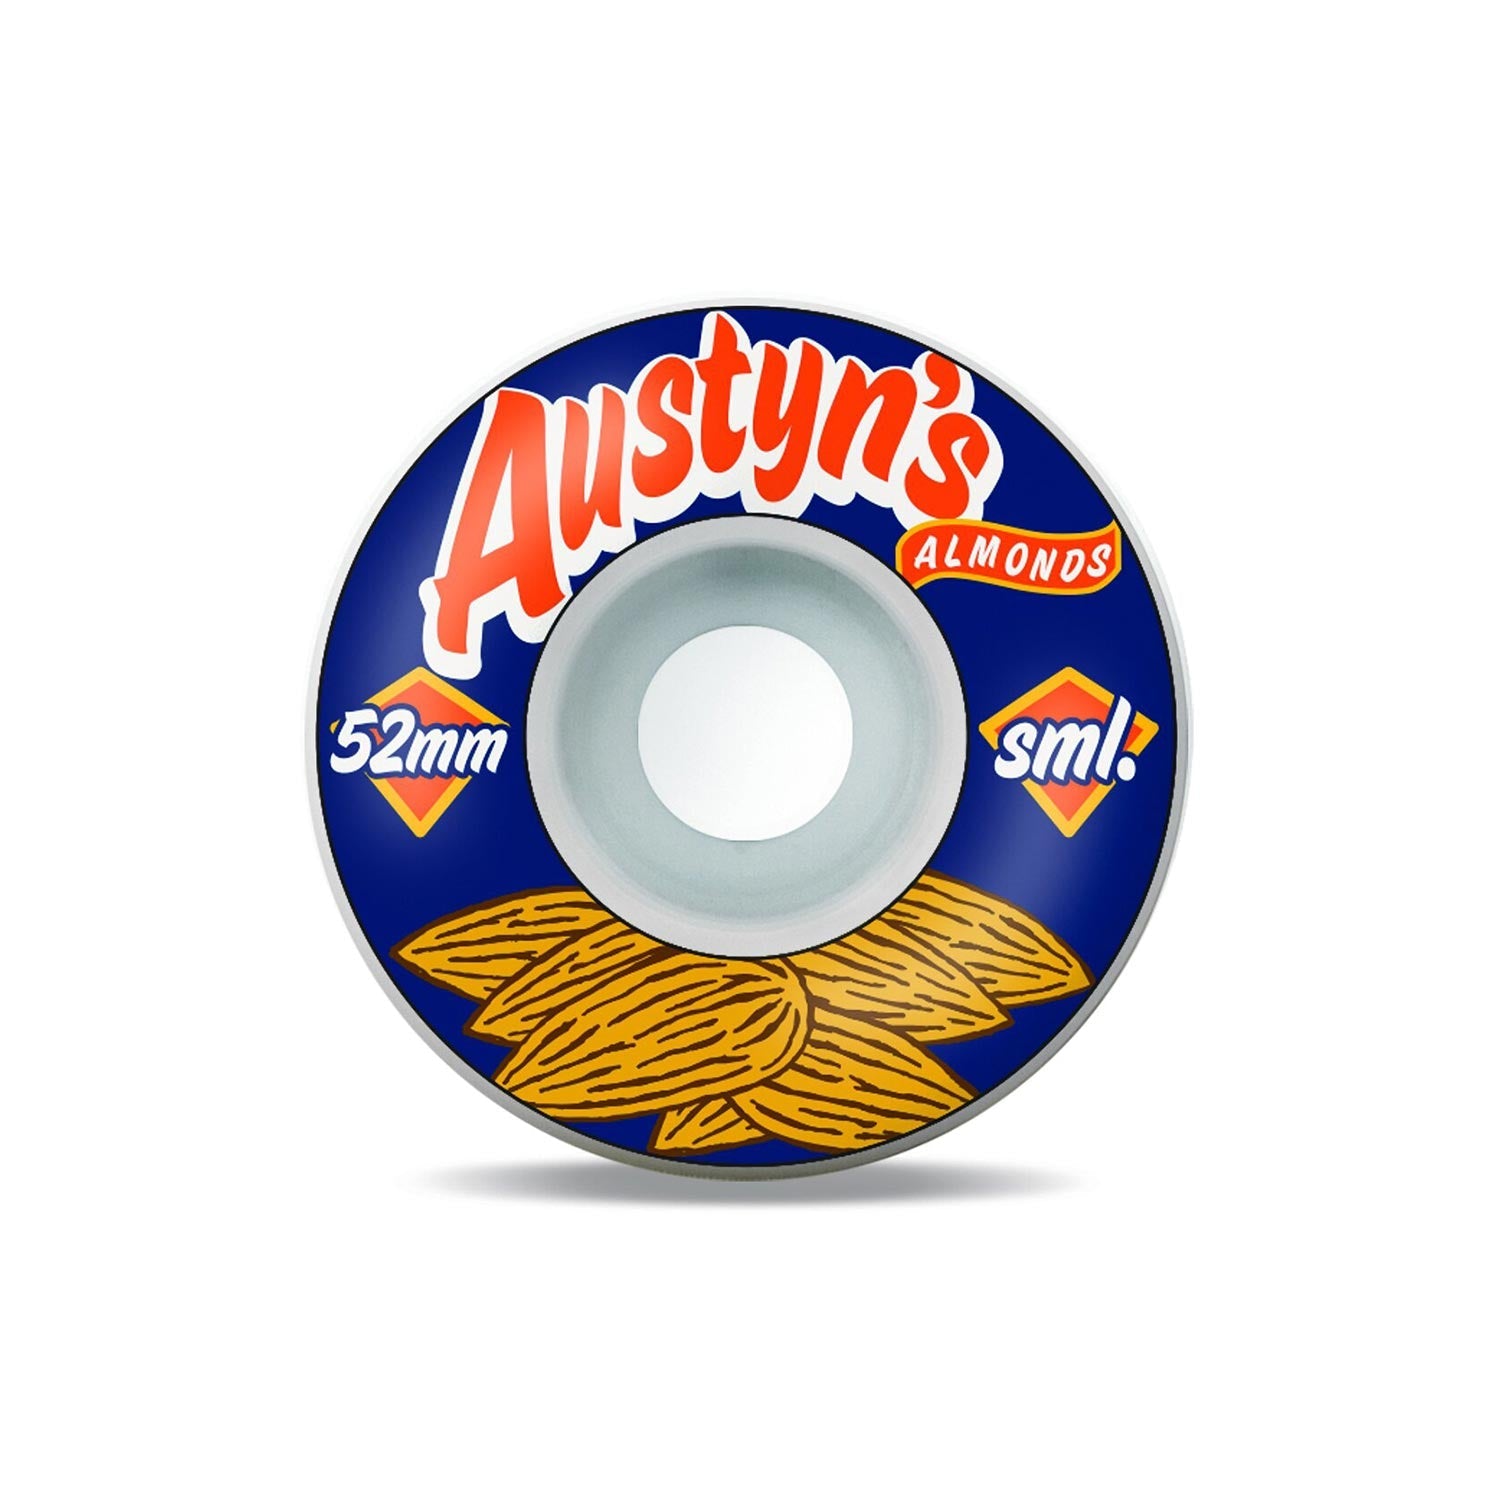 Sml. Wheels Austyn Gillette Austyn's Almonds (OG formula, 99a, 52mm) - Tiki Room Skateboards - 1